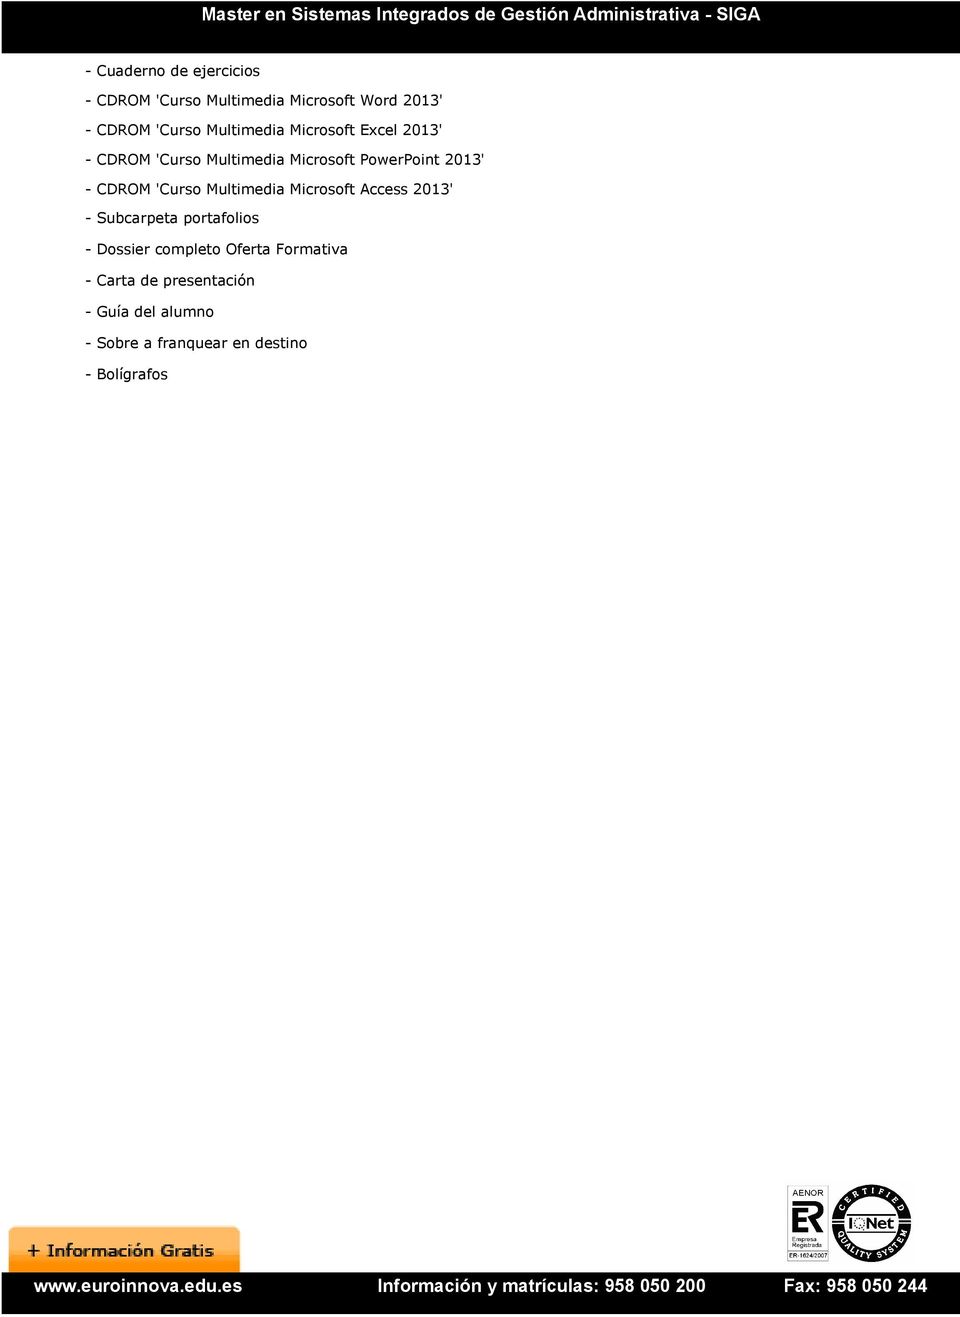 CDROM 'Curso Multimedia Microsoft Access 2013' - Subcarpeta portafolios - Dossier completo